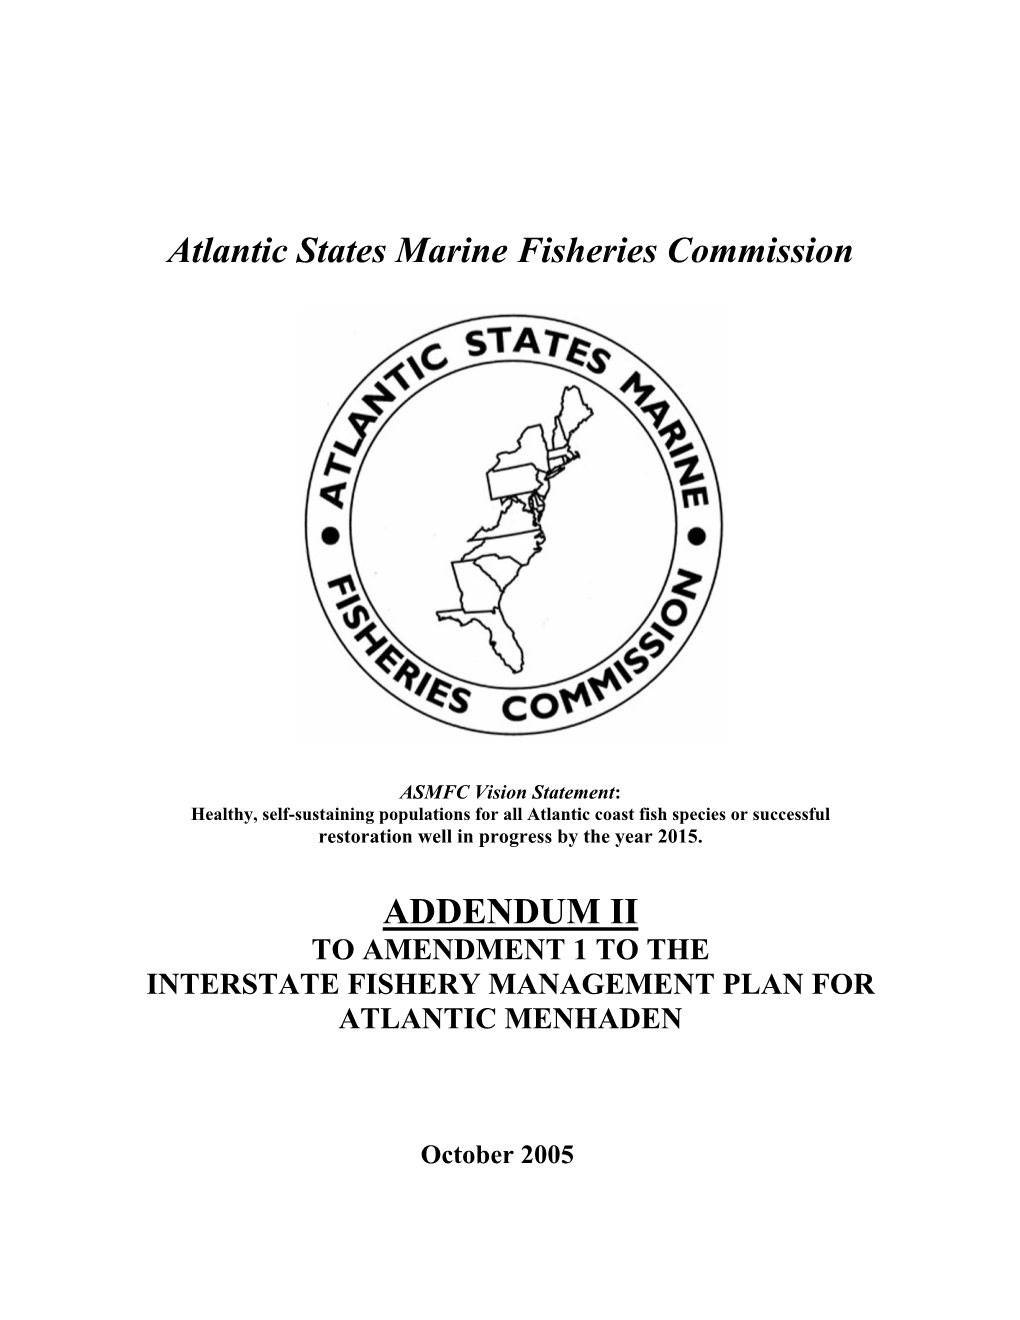 Addendum Ii to Amendment 1 to the Interstate Fishery Management Plan for Atlantic Menhaden